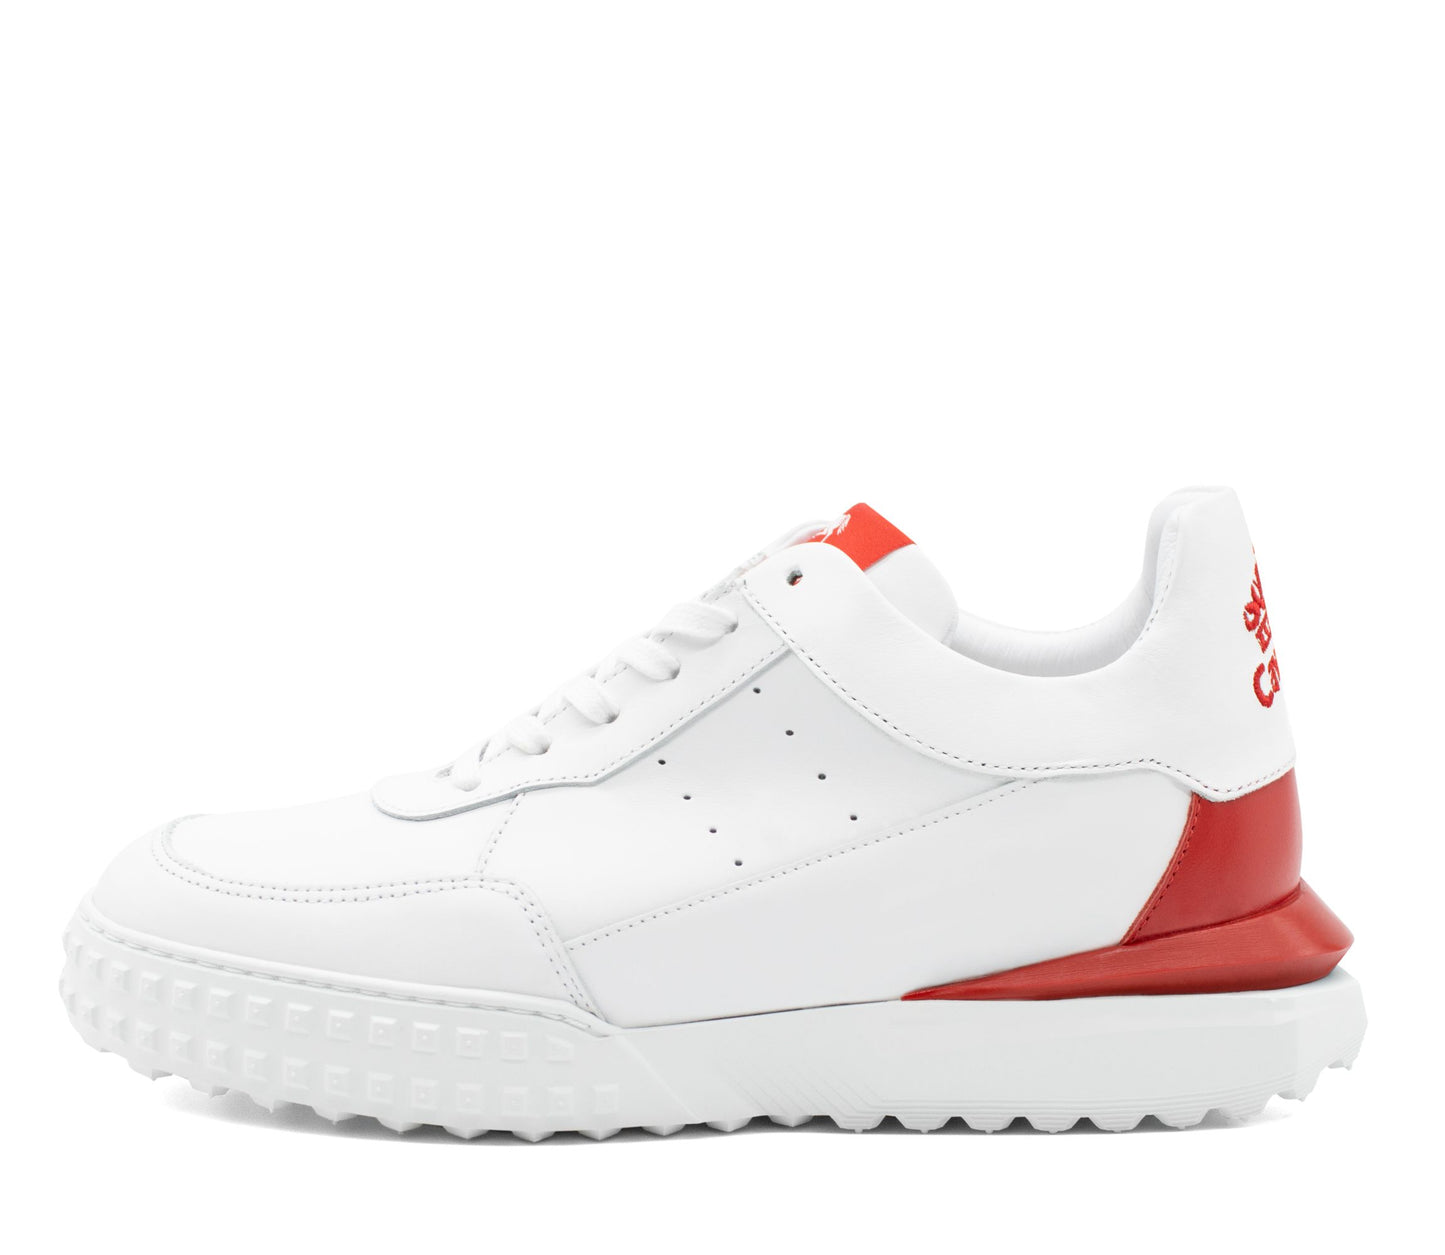 Cavalinho Authentic Sneakers - Red - 48080002.04_4